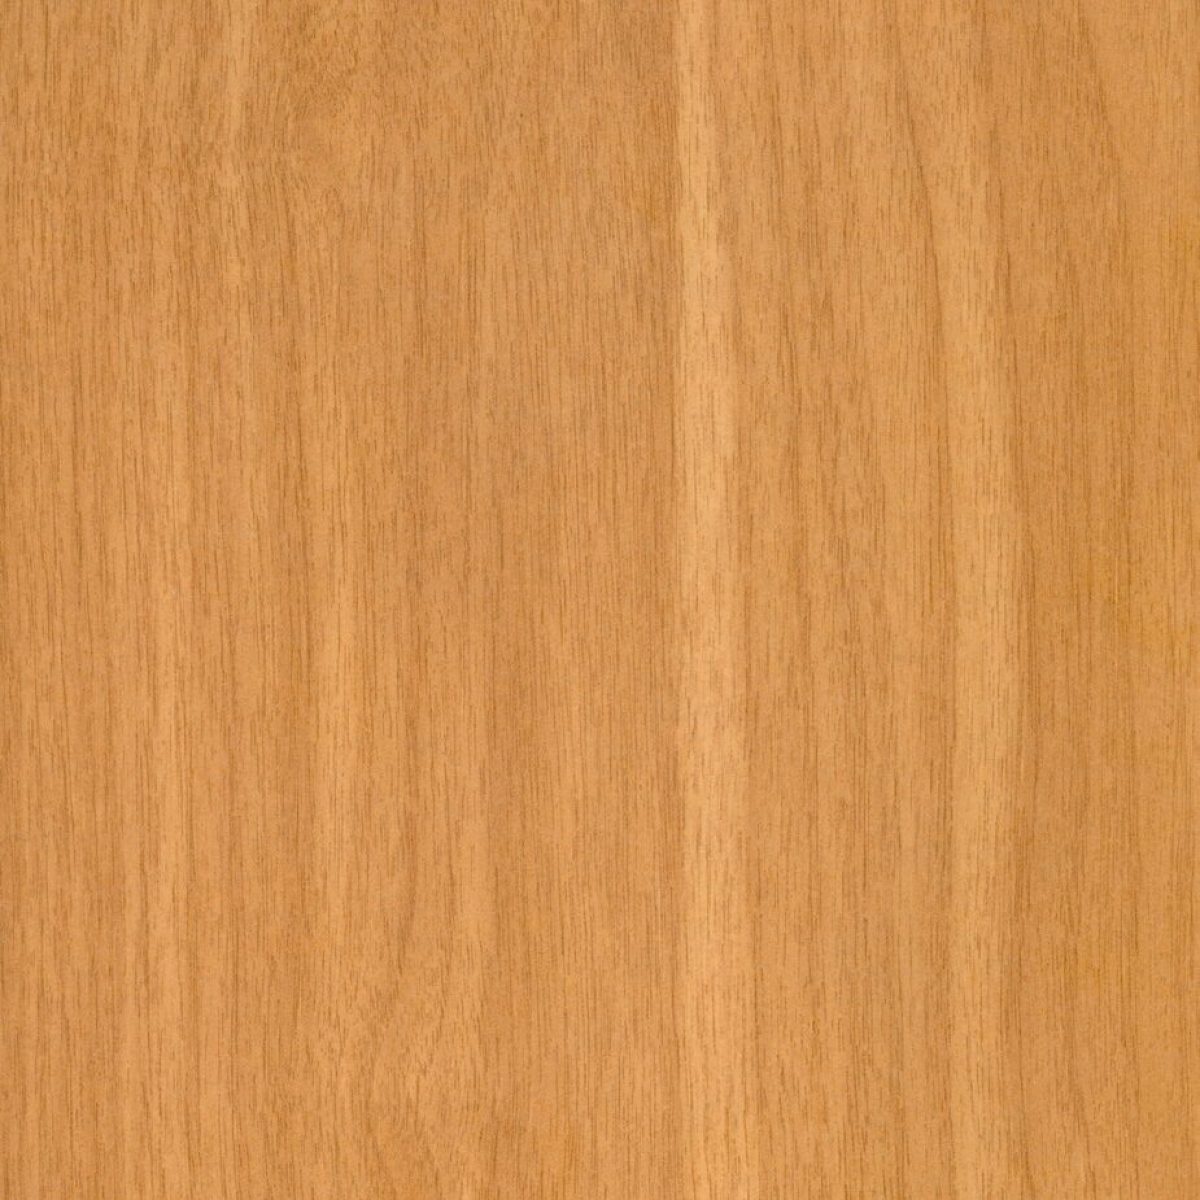 FRESNO - Tamaños (1,22 x 2,44m)  |  Espesor (0.7mm)